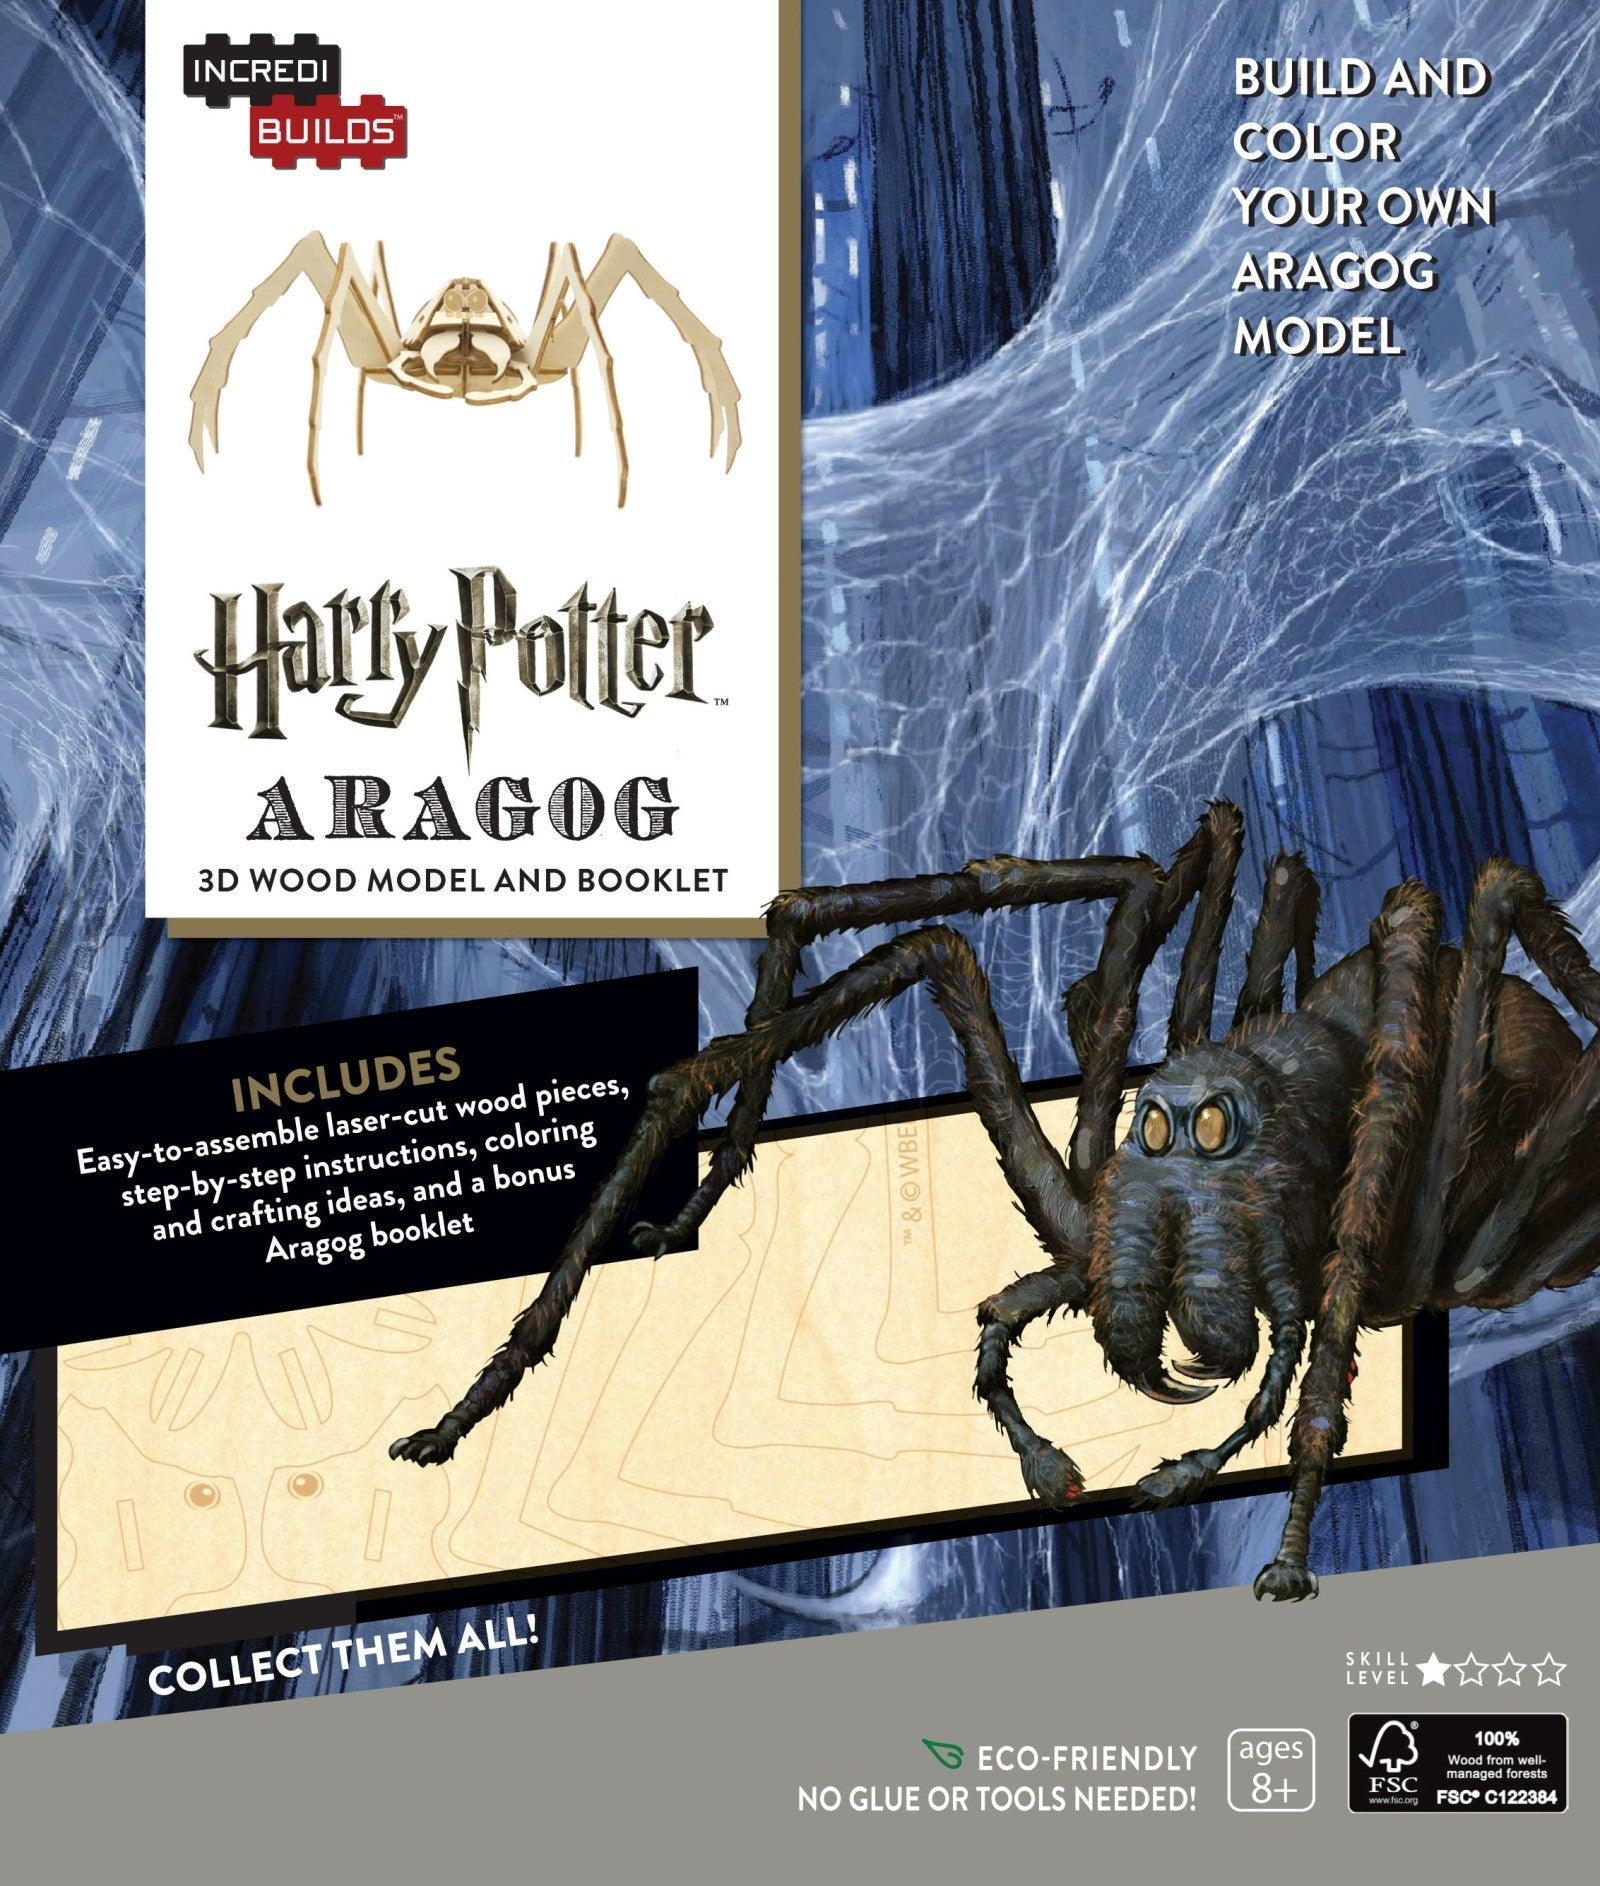 VR-42859 Incredibuilds Harry Potter Aragog 3D Wood Model and Booklet - Insight Editions - Titan Pop Culture